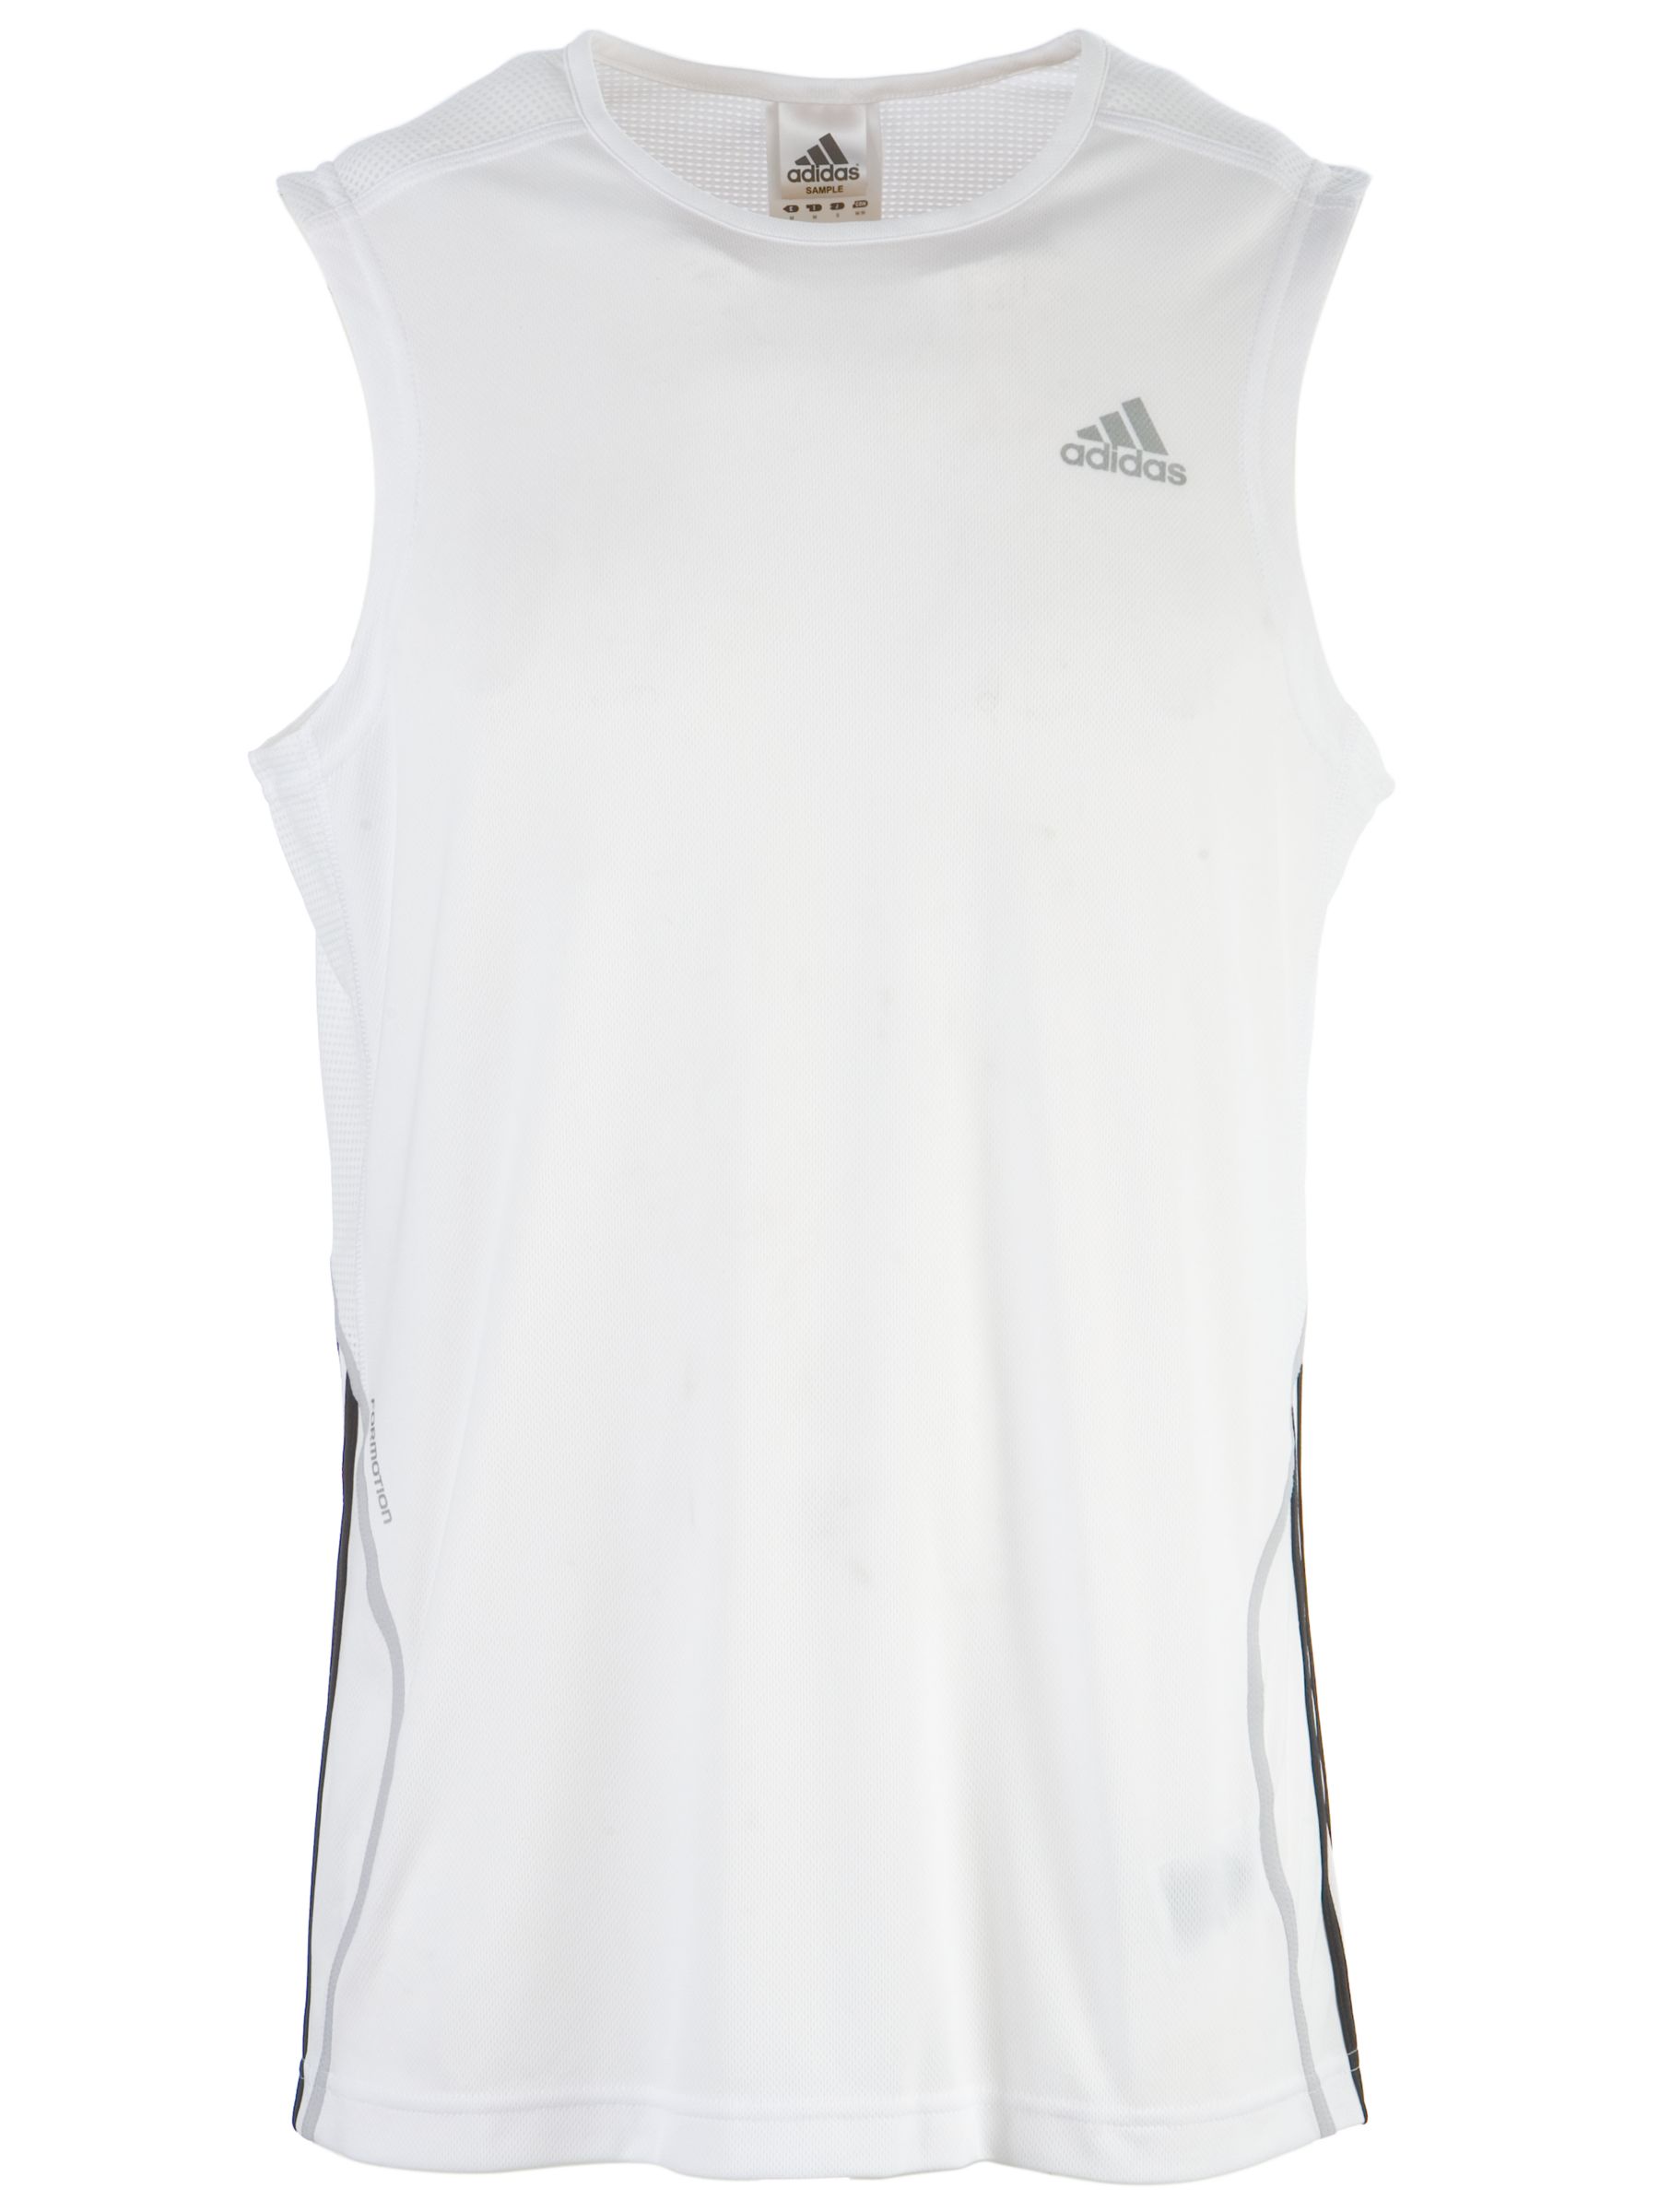 Adidas Response Sleeveless T-Shirt, White